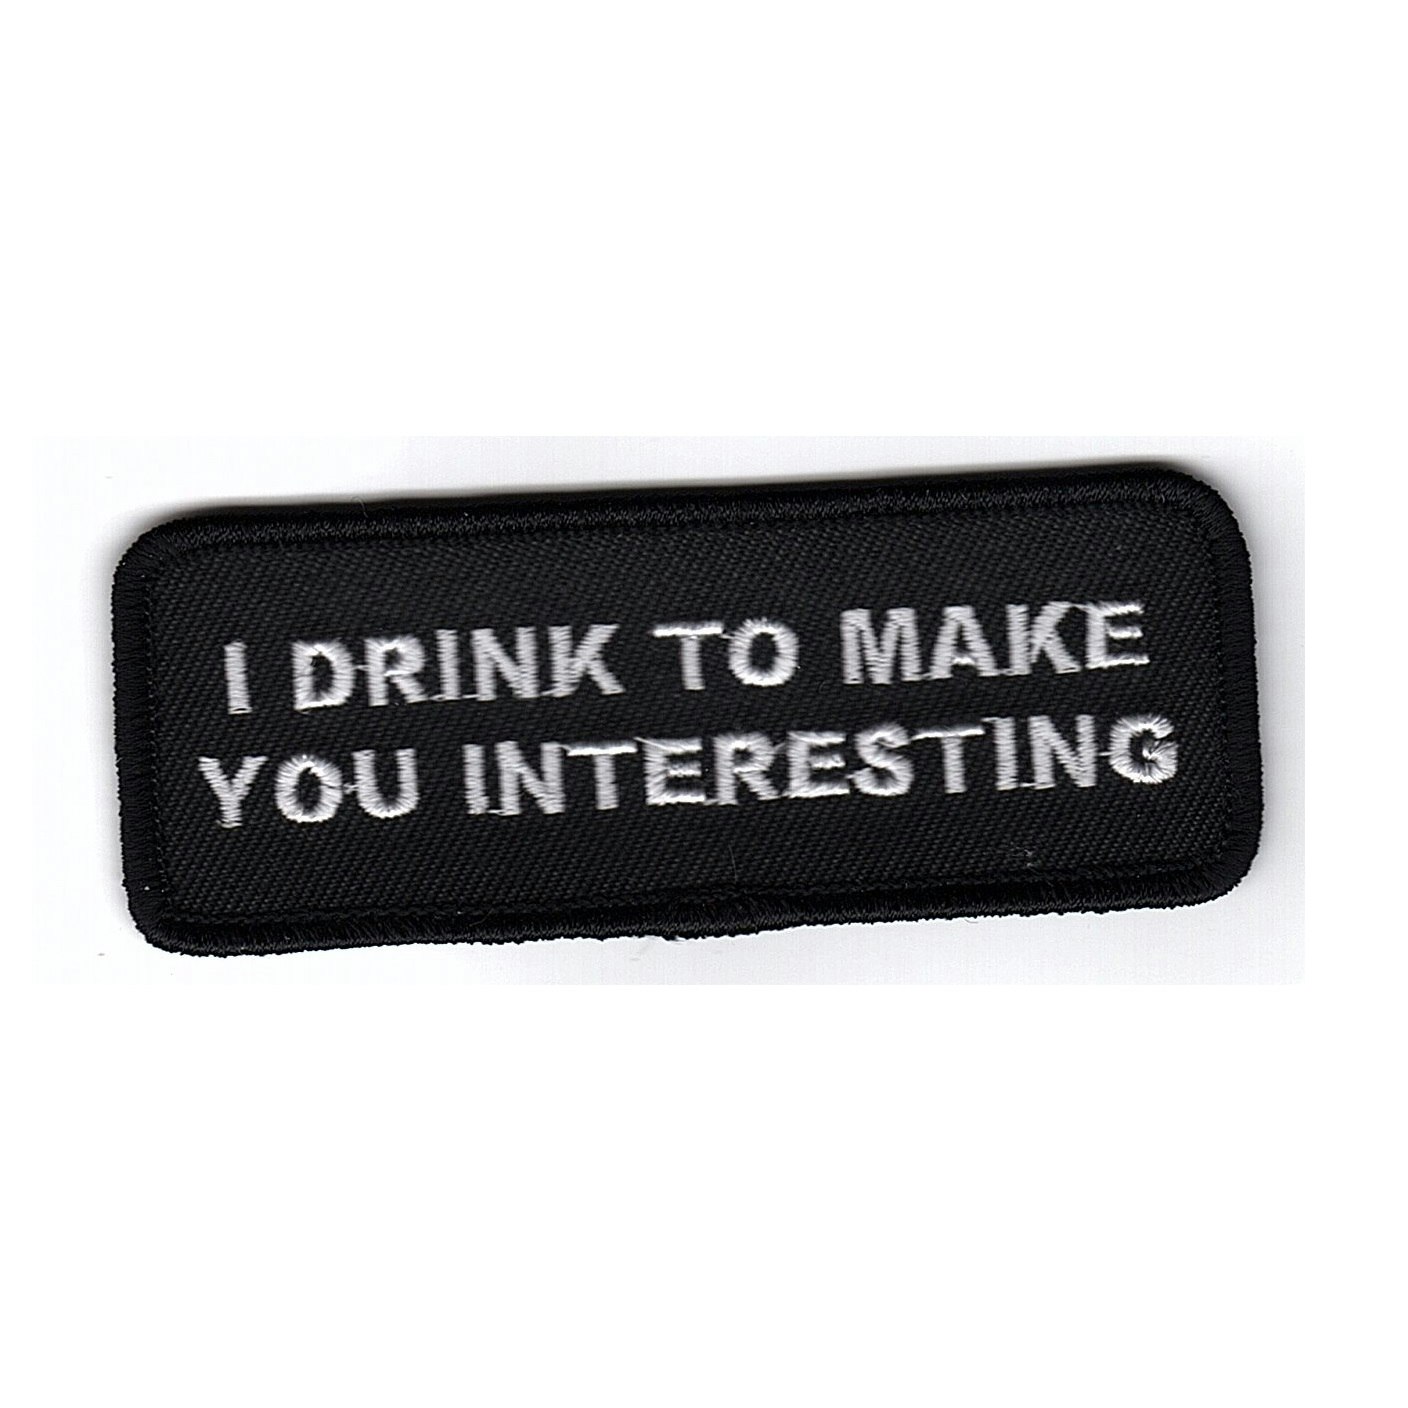 I drink to make you interesting